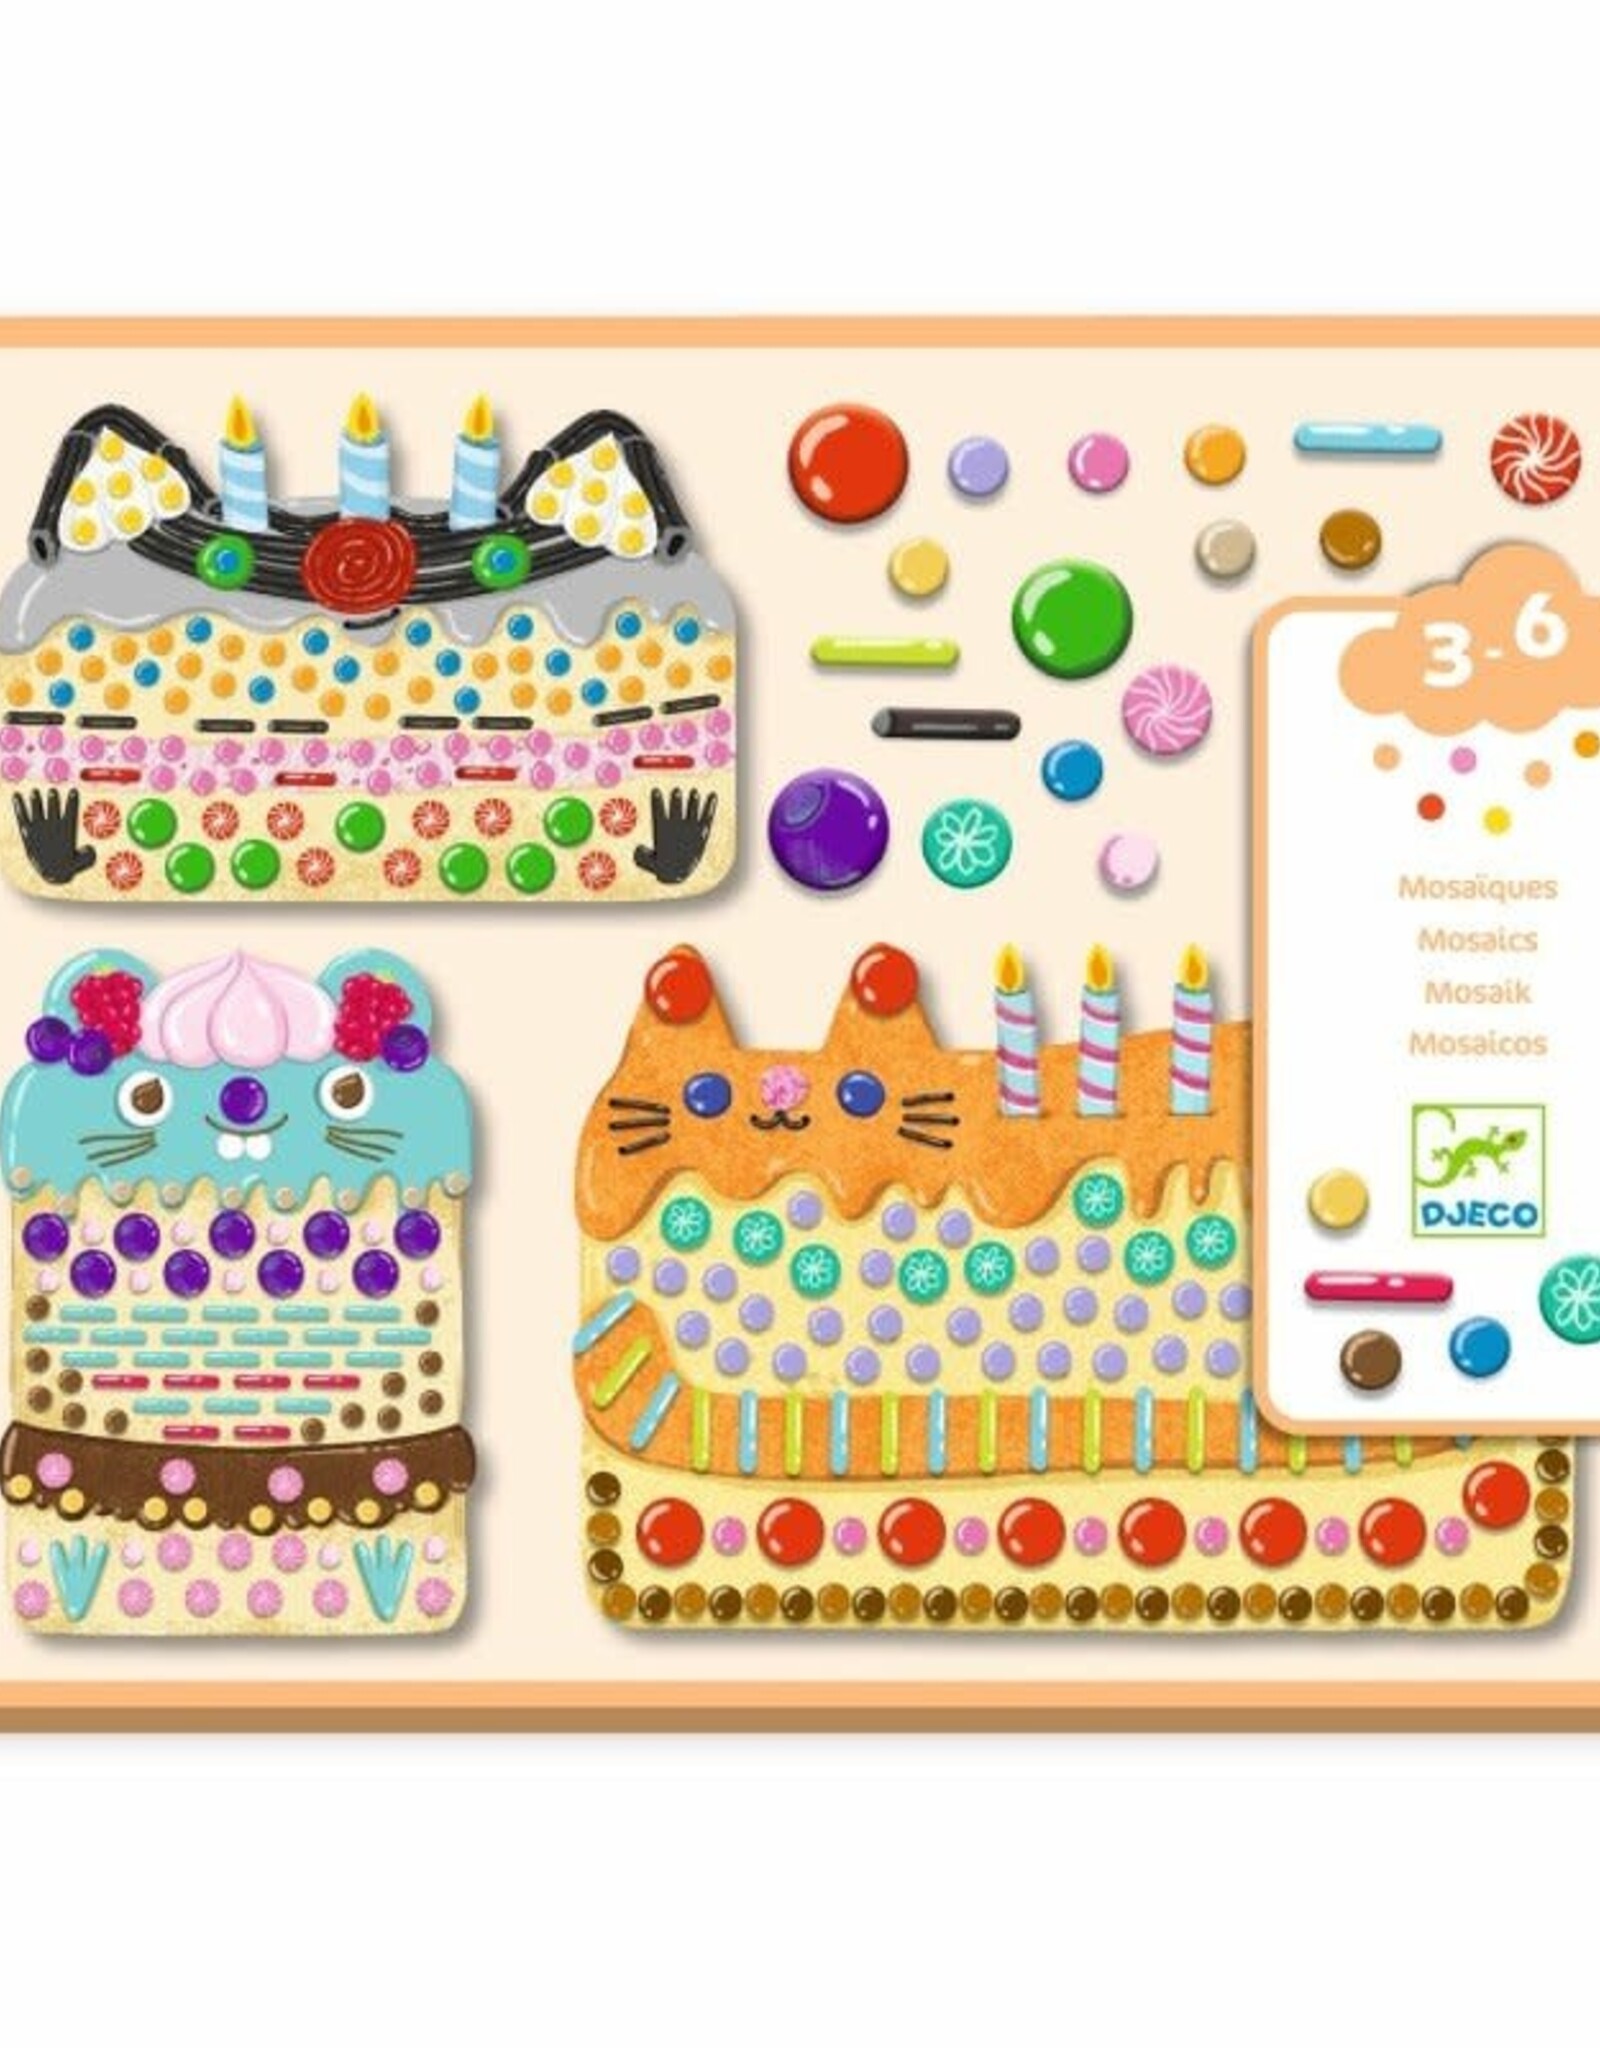 Djeco Cakes & Sweet Collage Craft Kit